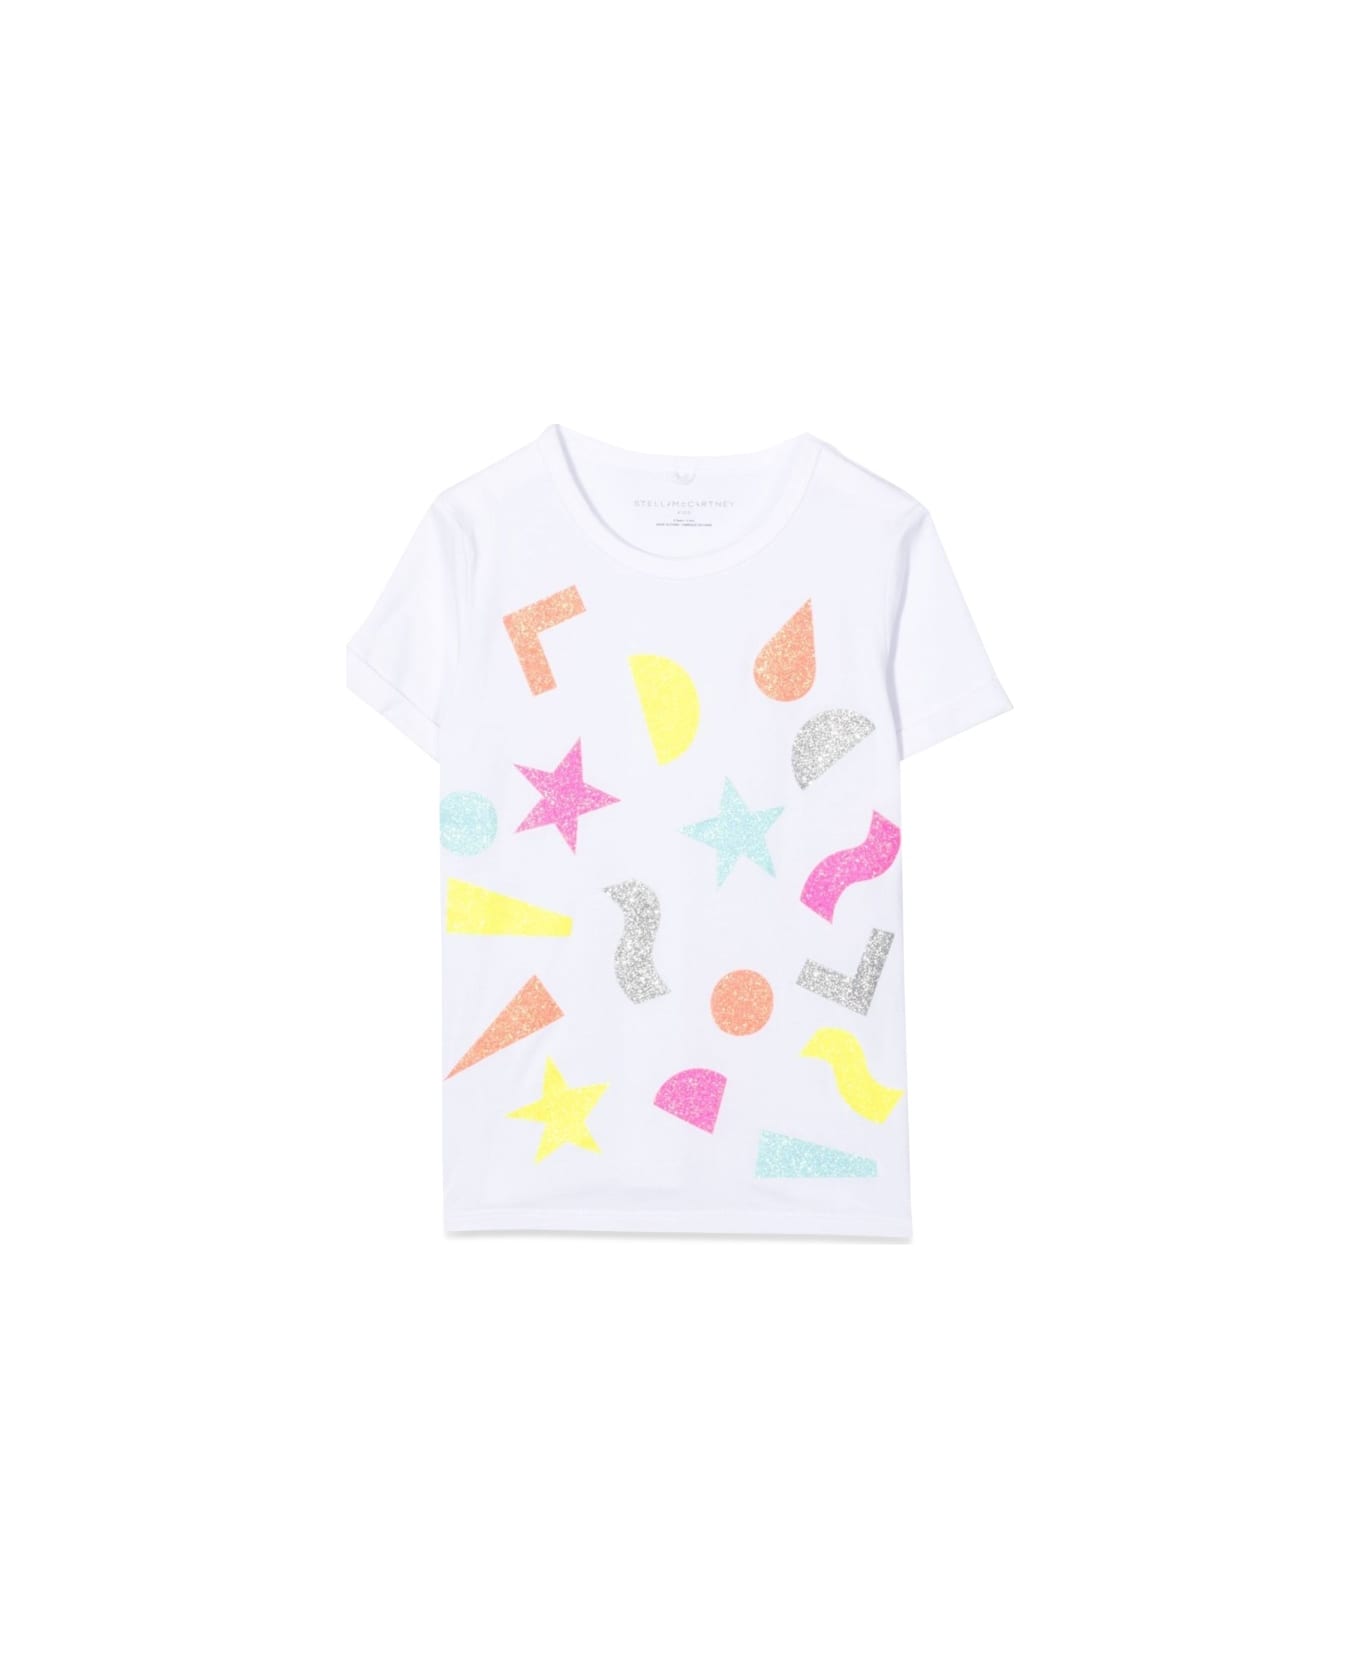 Stella McCartney Kids Geometric Shapes M/c T-shirt - MULTICOLOUR